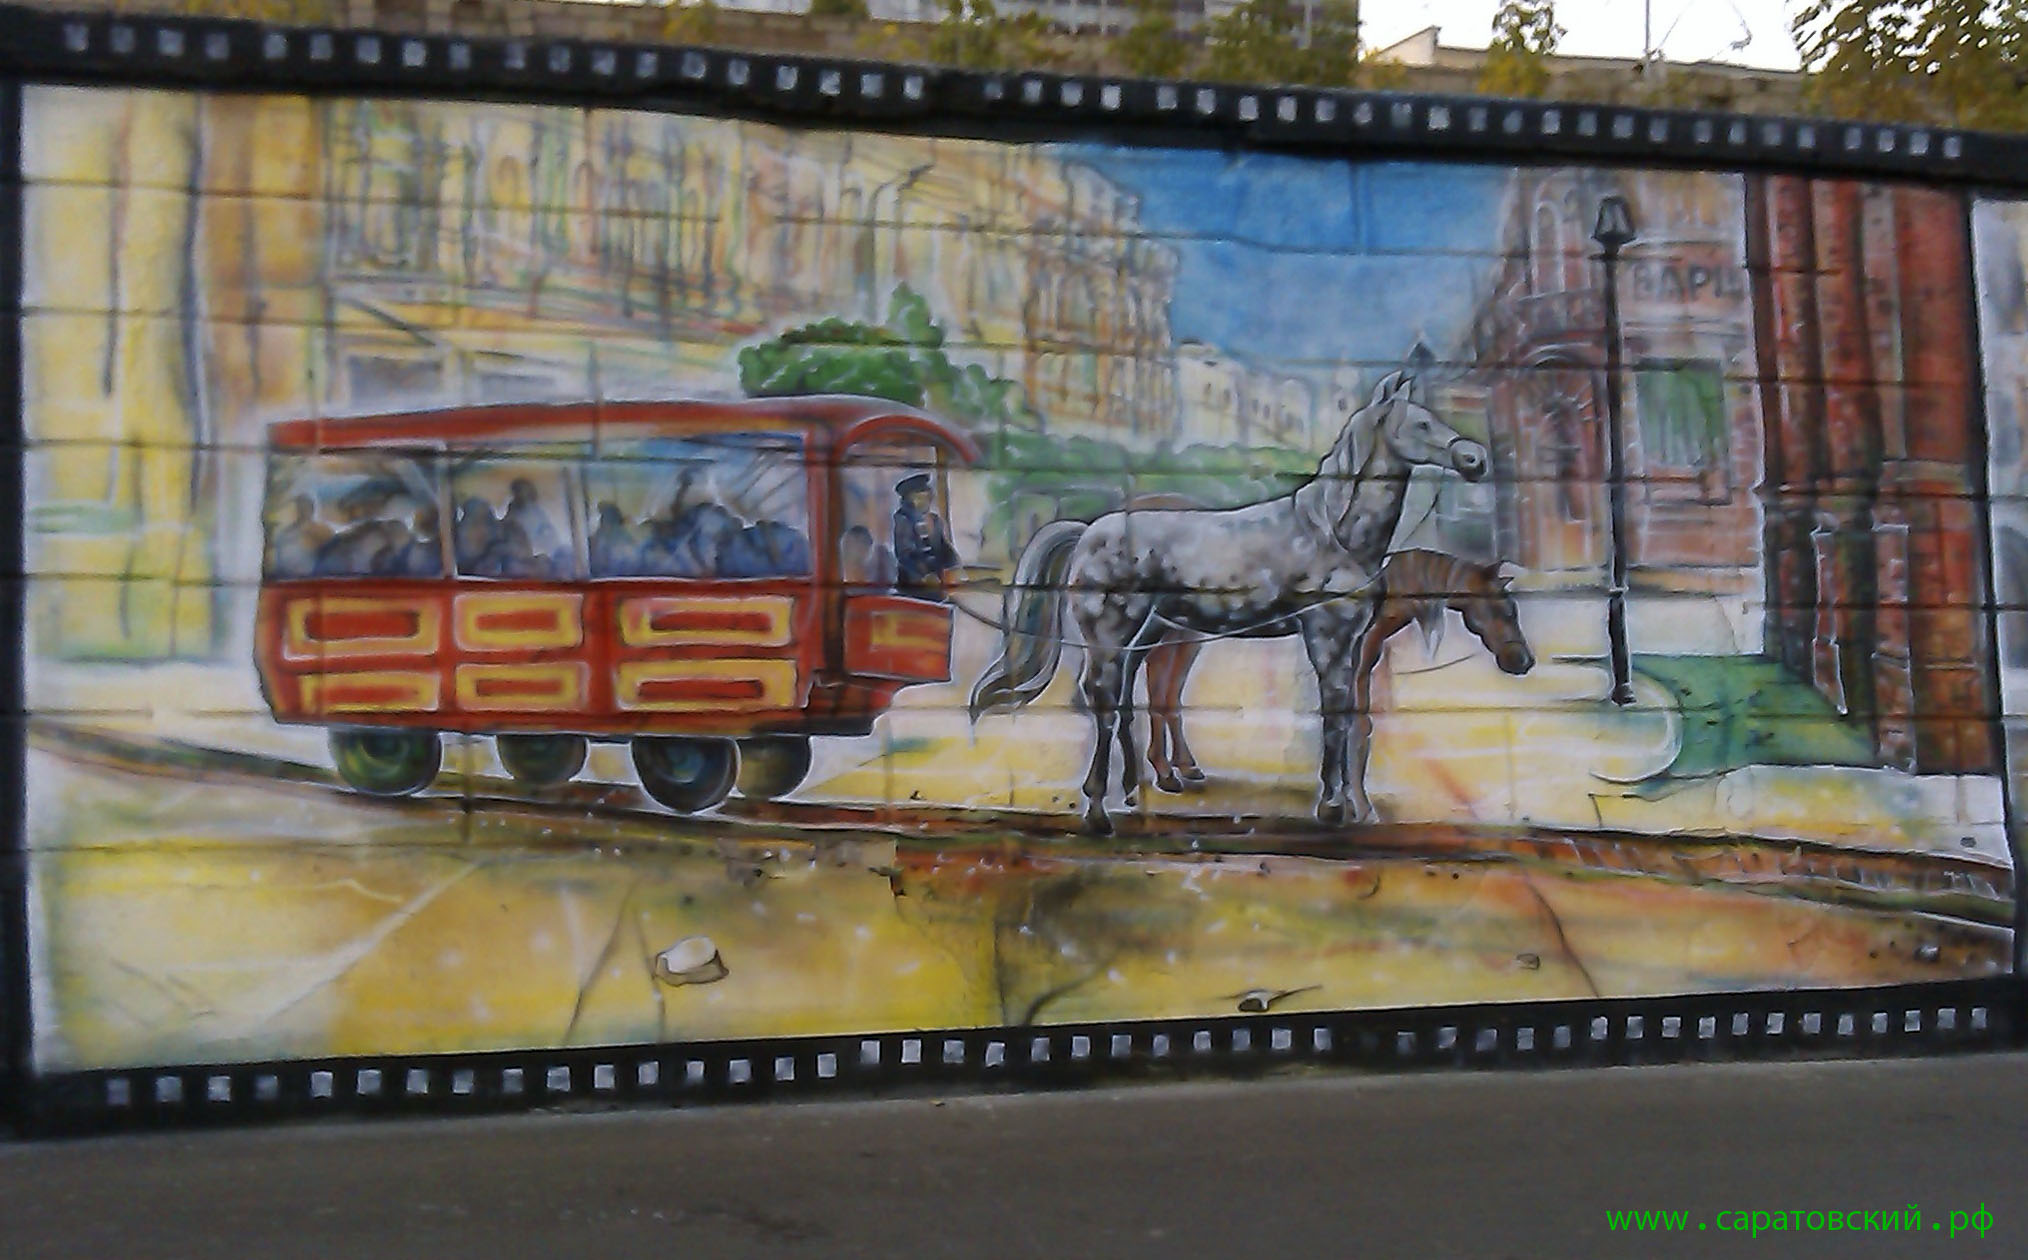 Saratov embankment graffiti: Saratov horse-drawn tramline, Russia